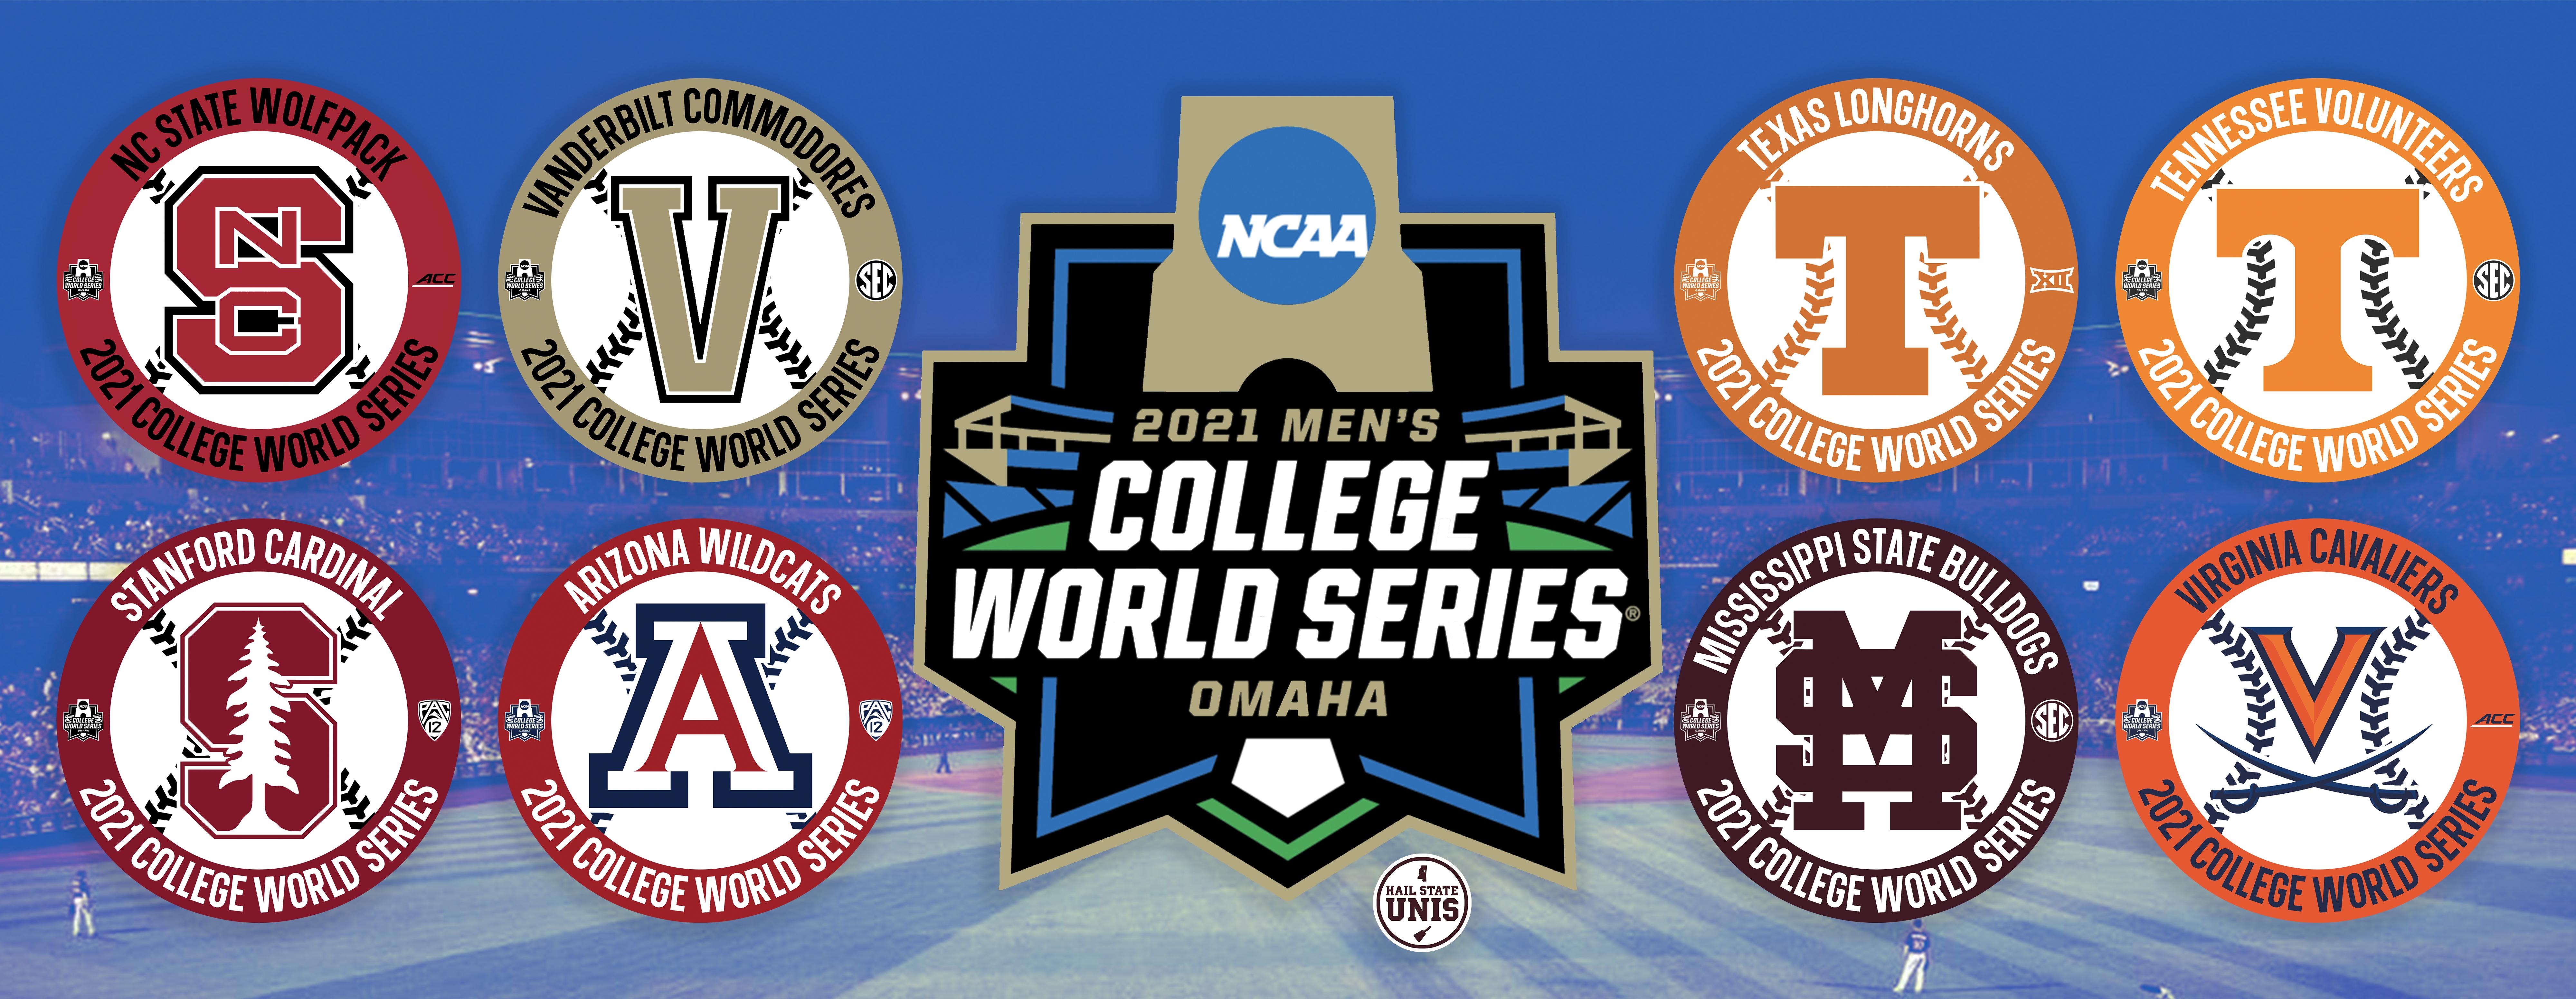 2021 College World Series Bulldogs Advance to National Championship